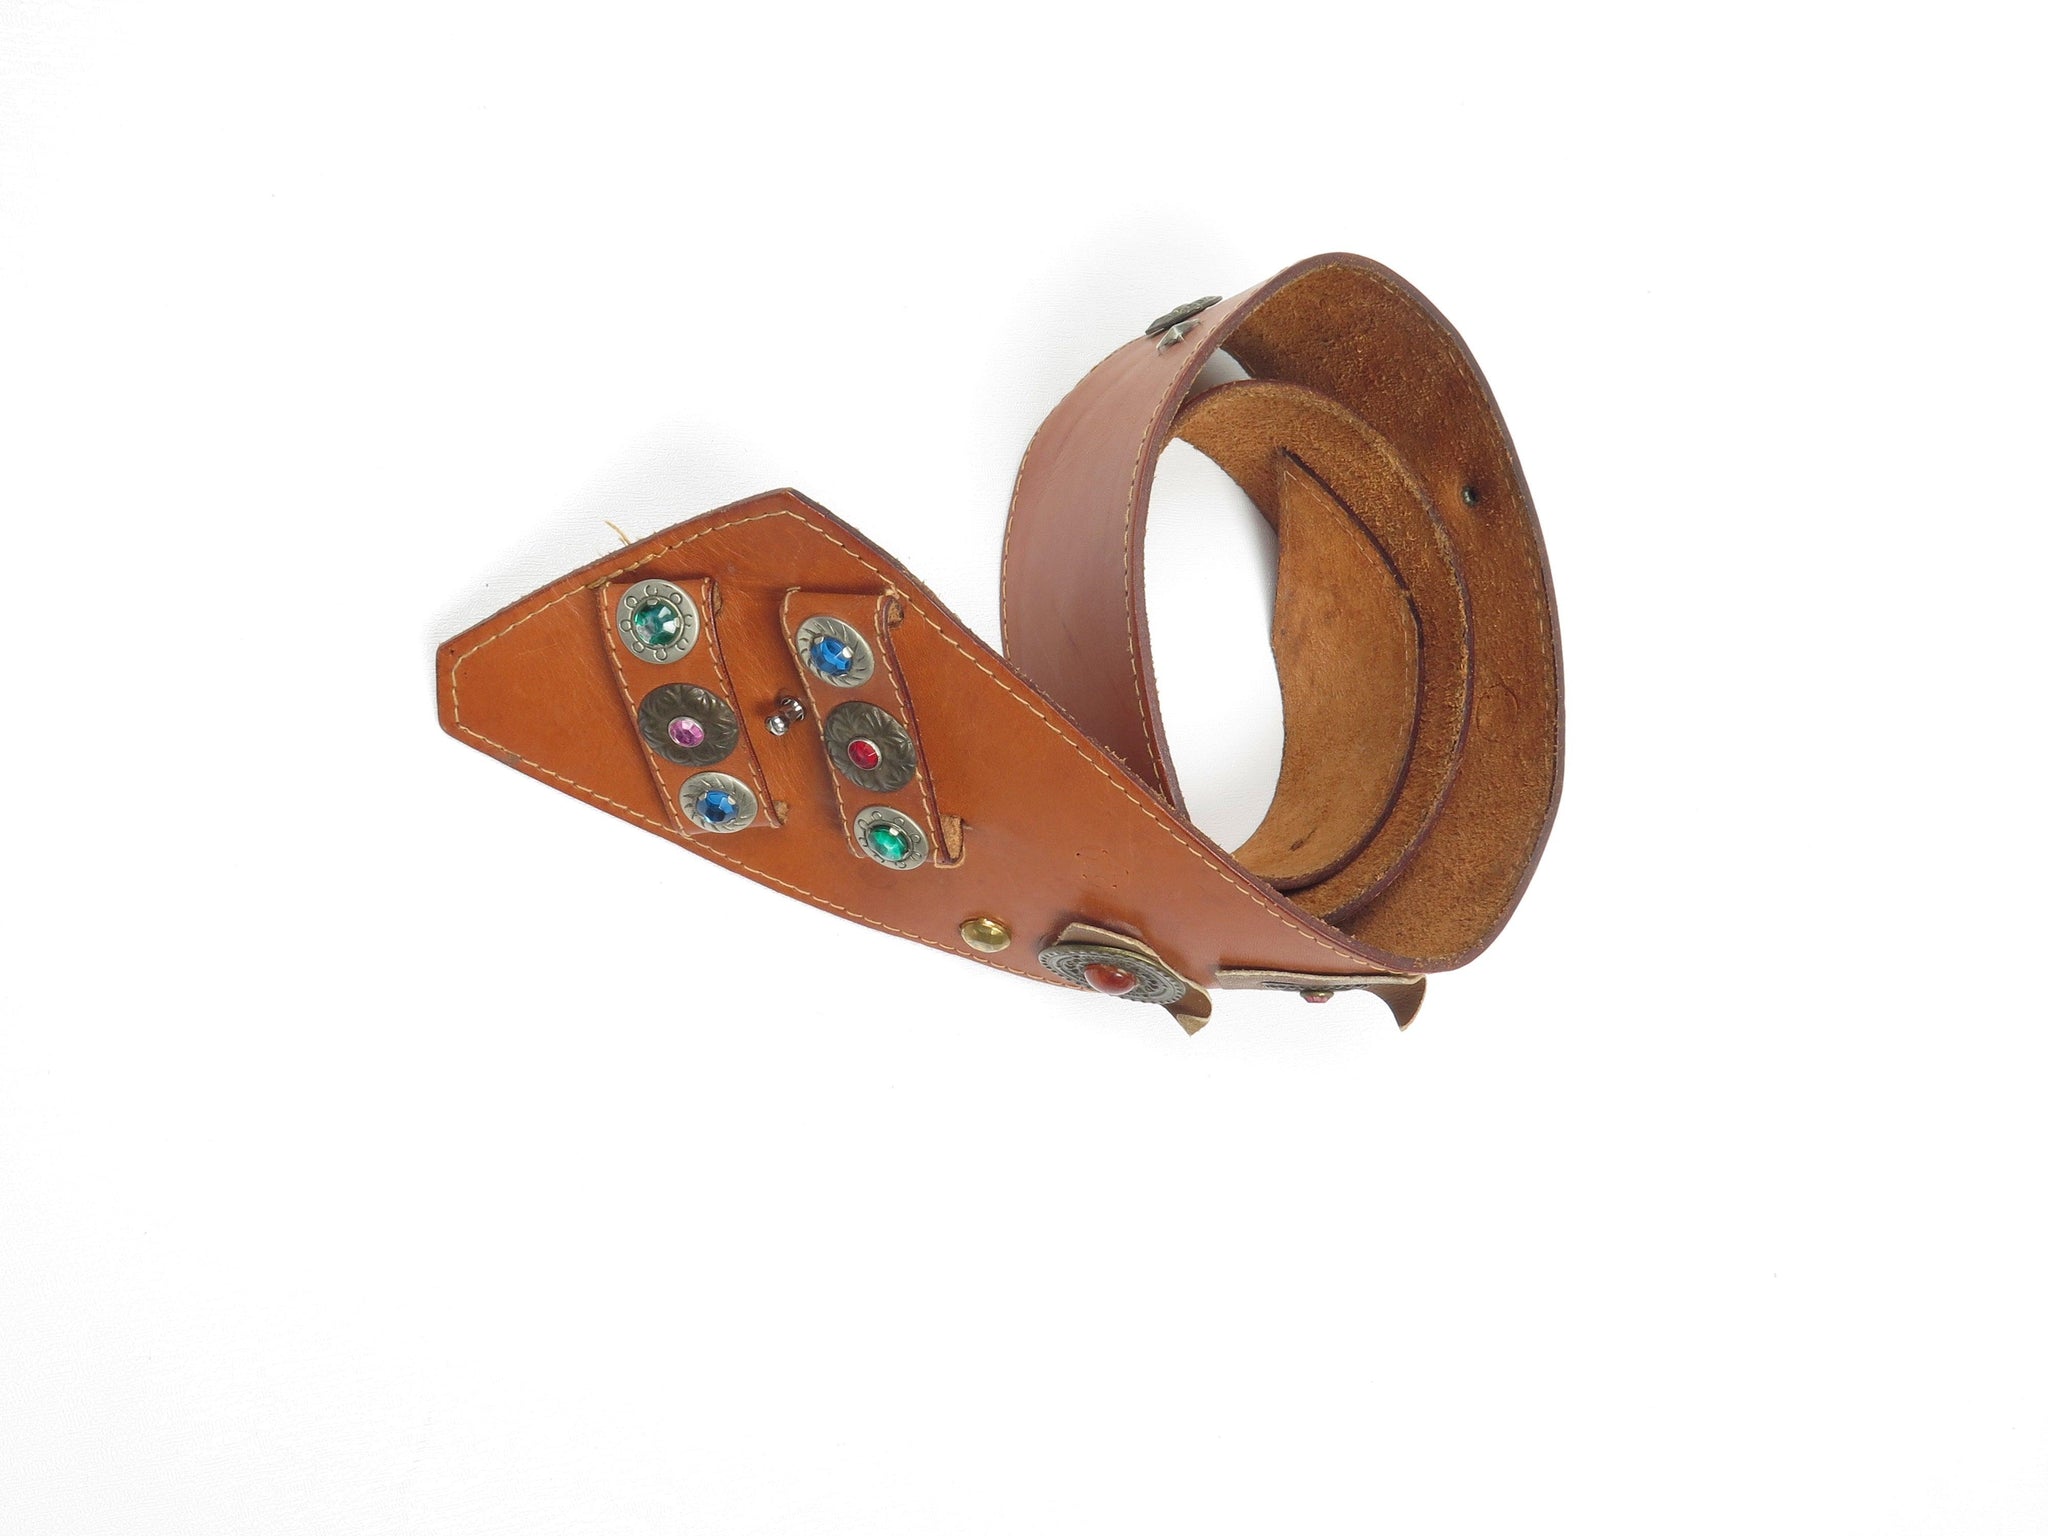 Tan Leather Vintage Waist Belt With Embellishments - The Harlequin